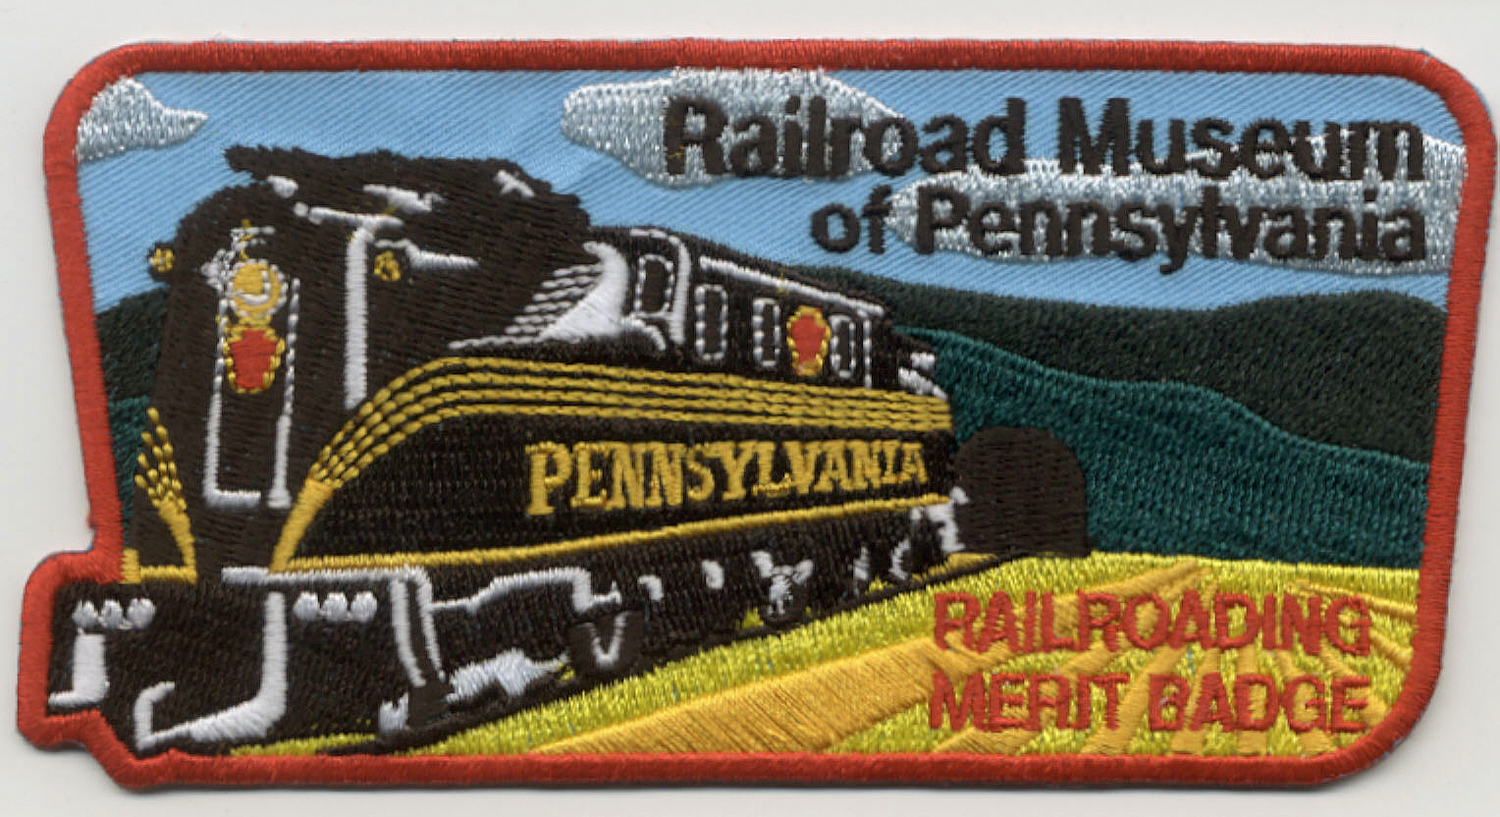 Railroad Museum of Pennsylvania merit badge